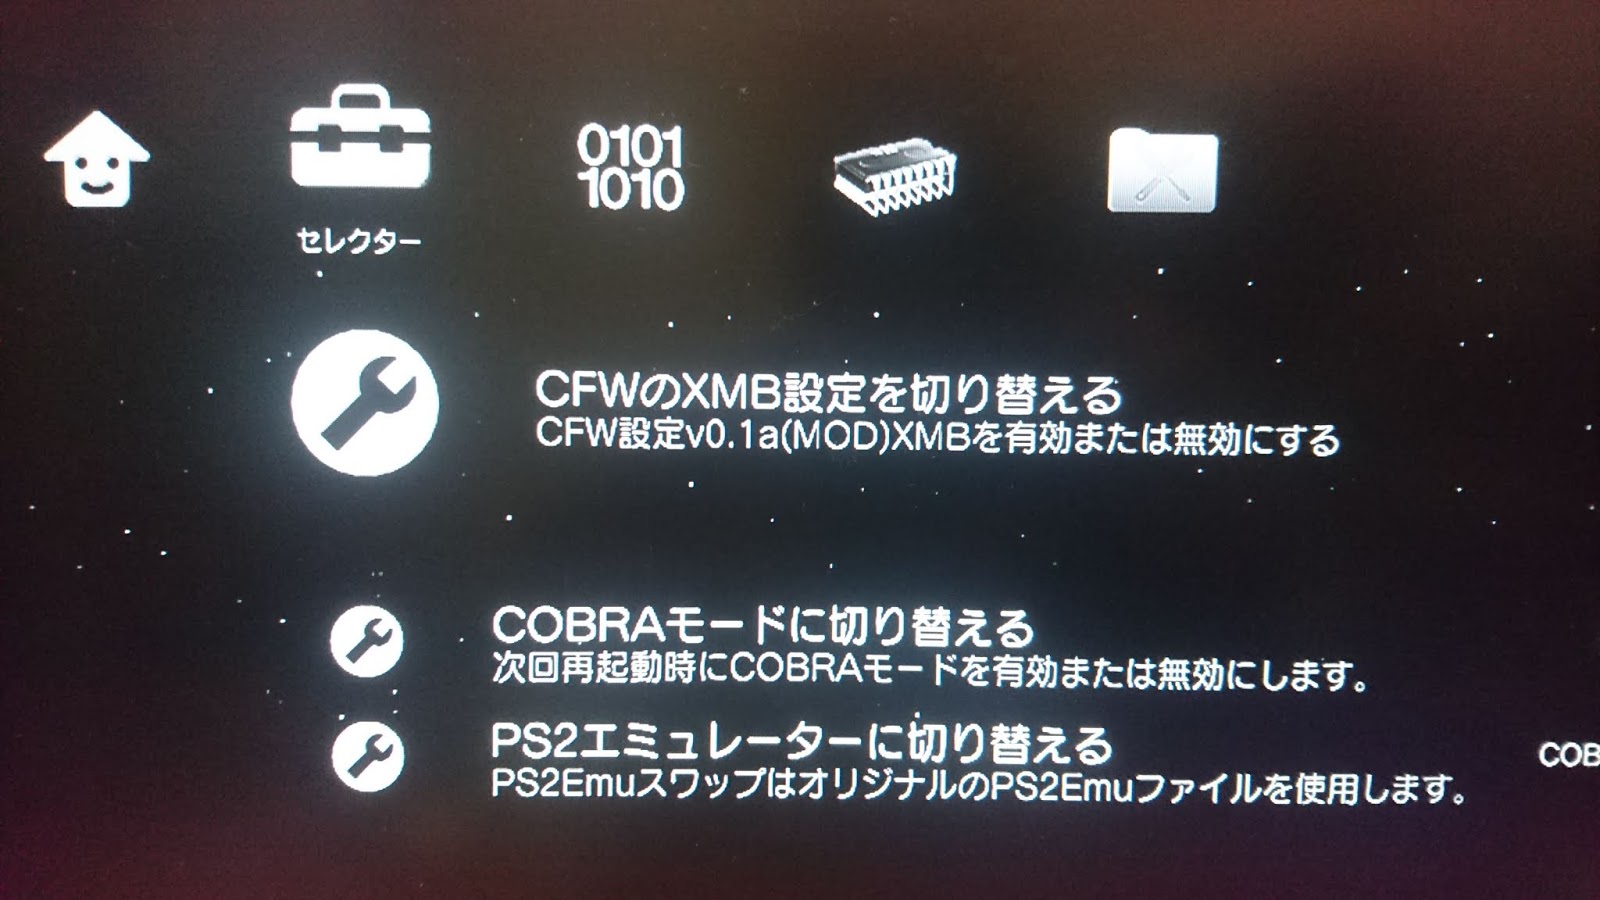 Ps3 darknet cobra edition hydraruzxpnew4af браузер с тор для виндовс фоне hidra